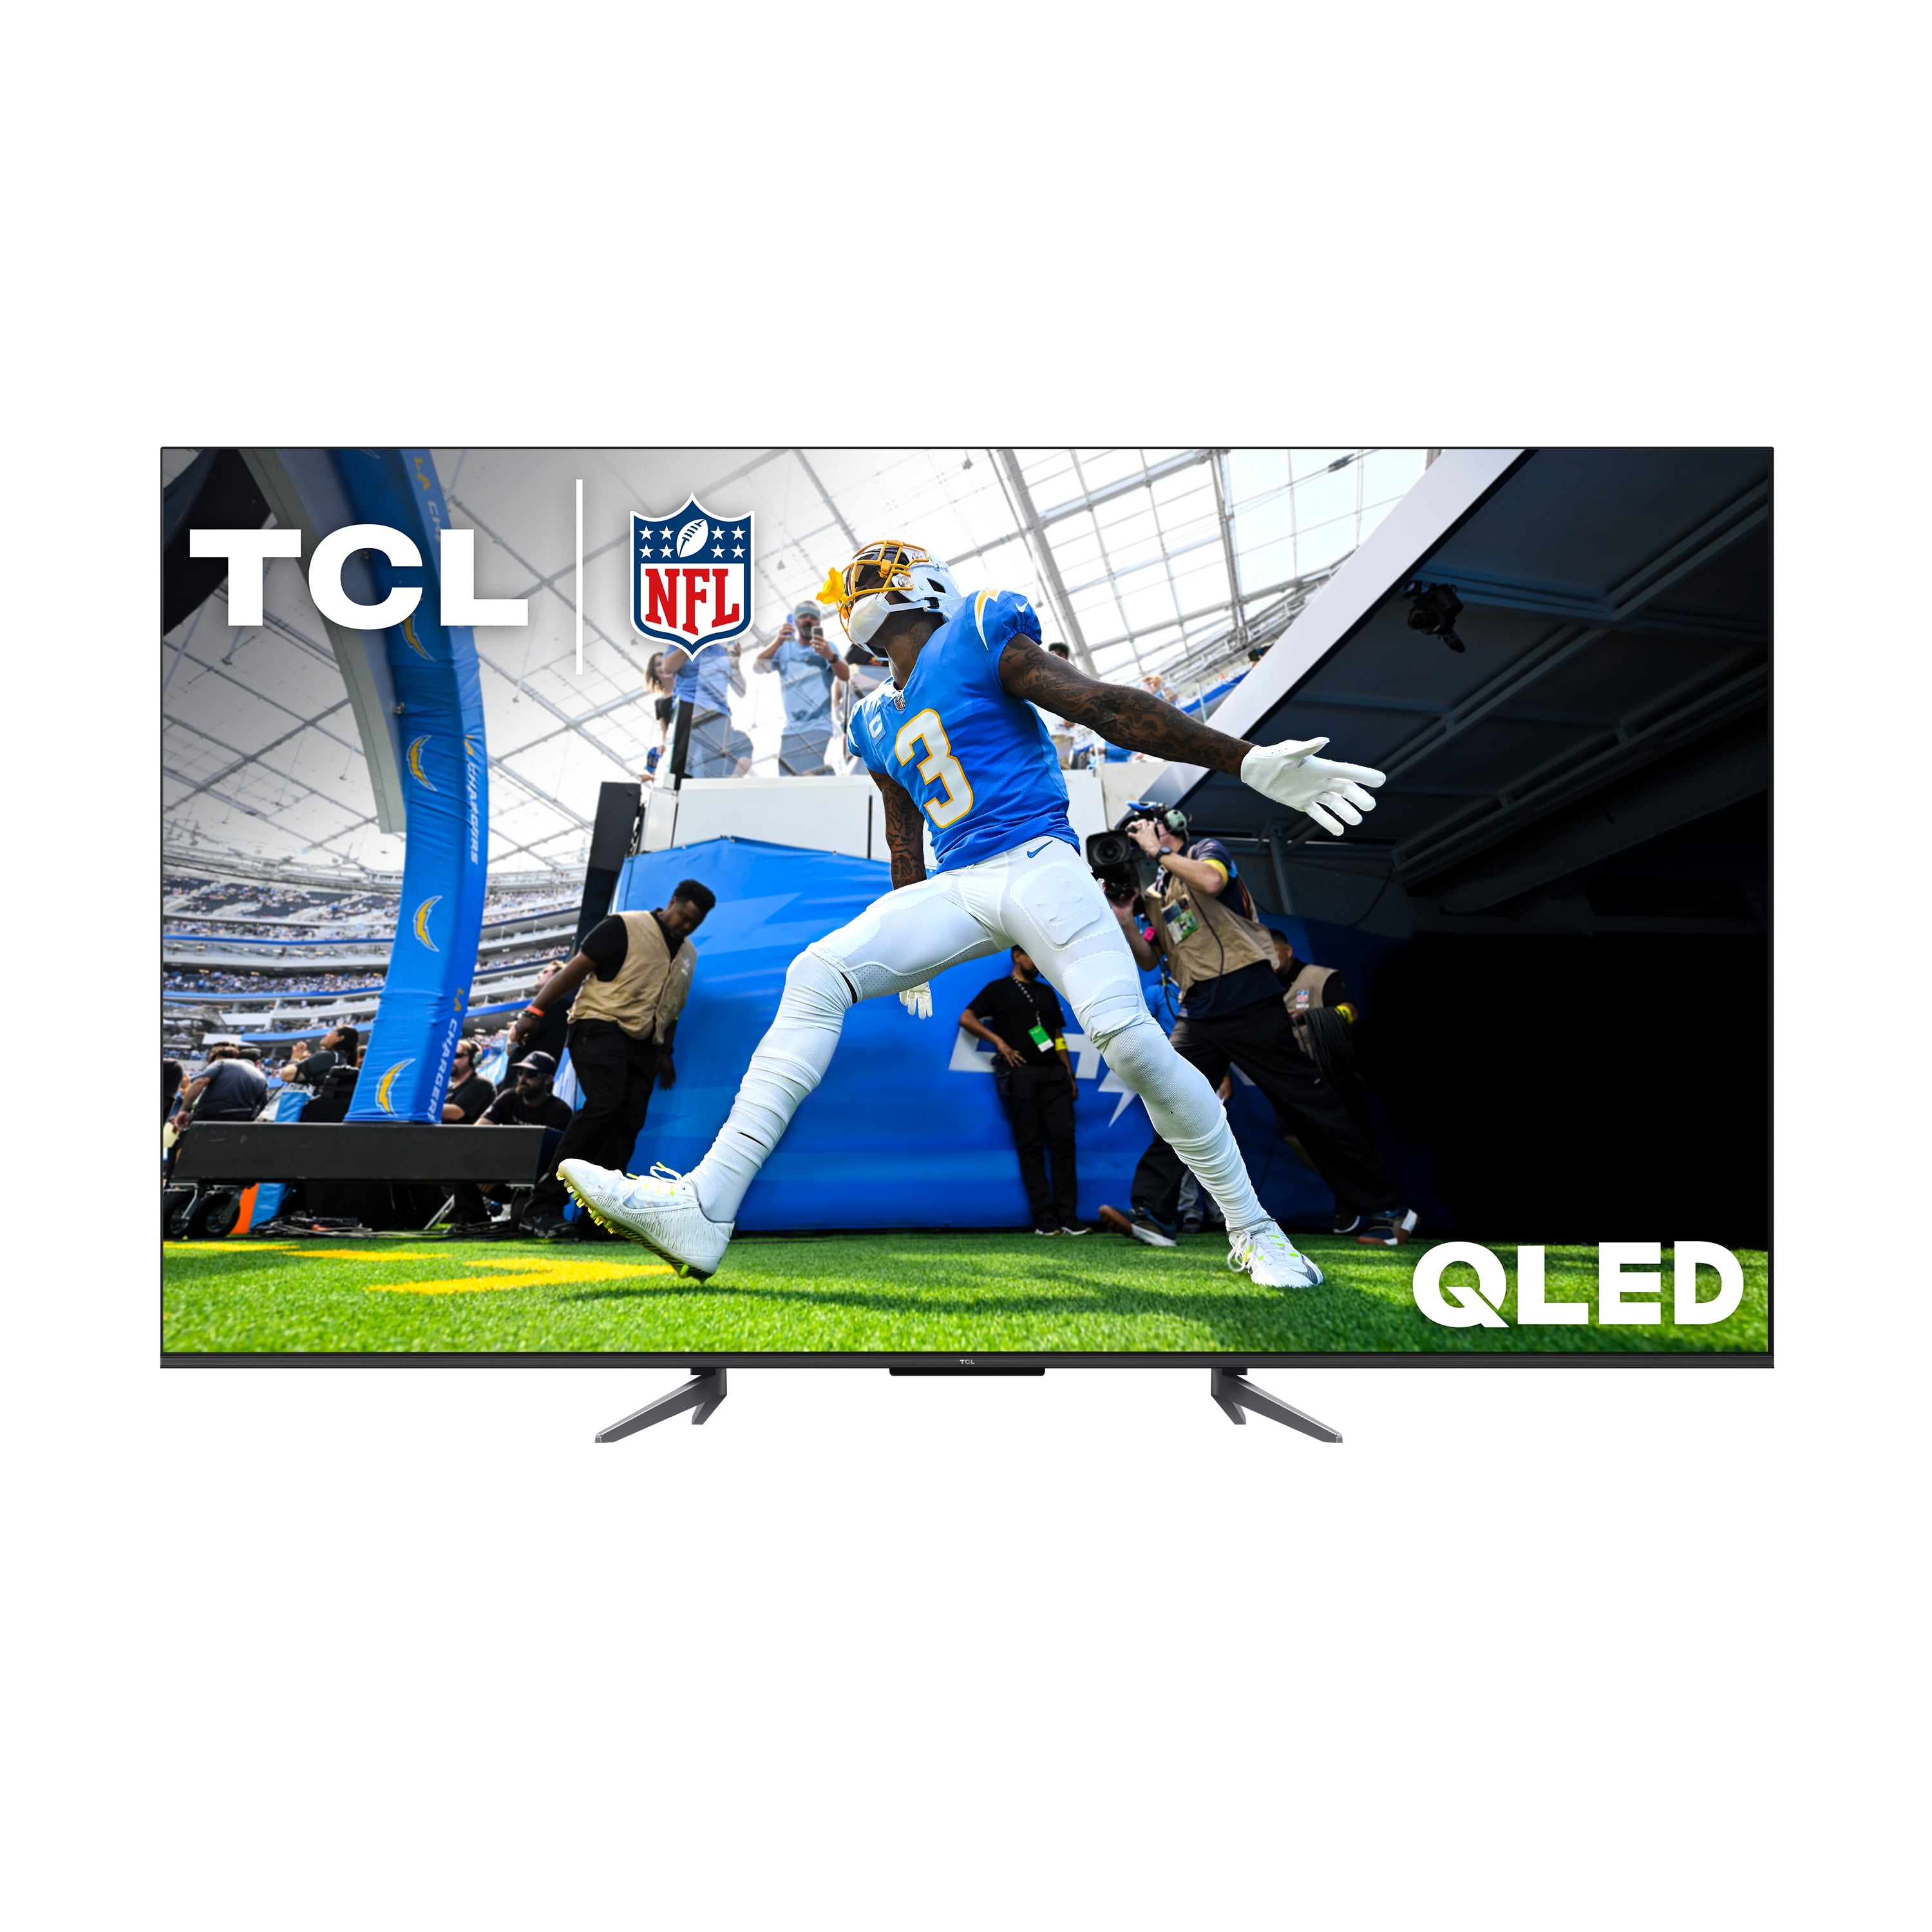 TCL 65 Q Class 4K QLED HDR Smart TV with Google TV - 65Q670G